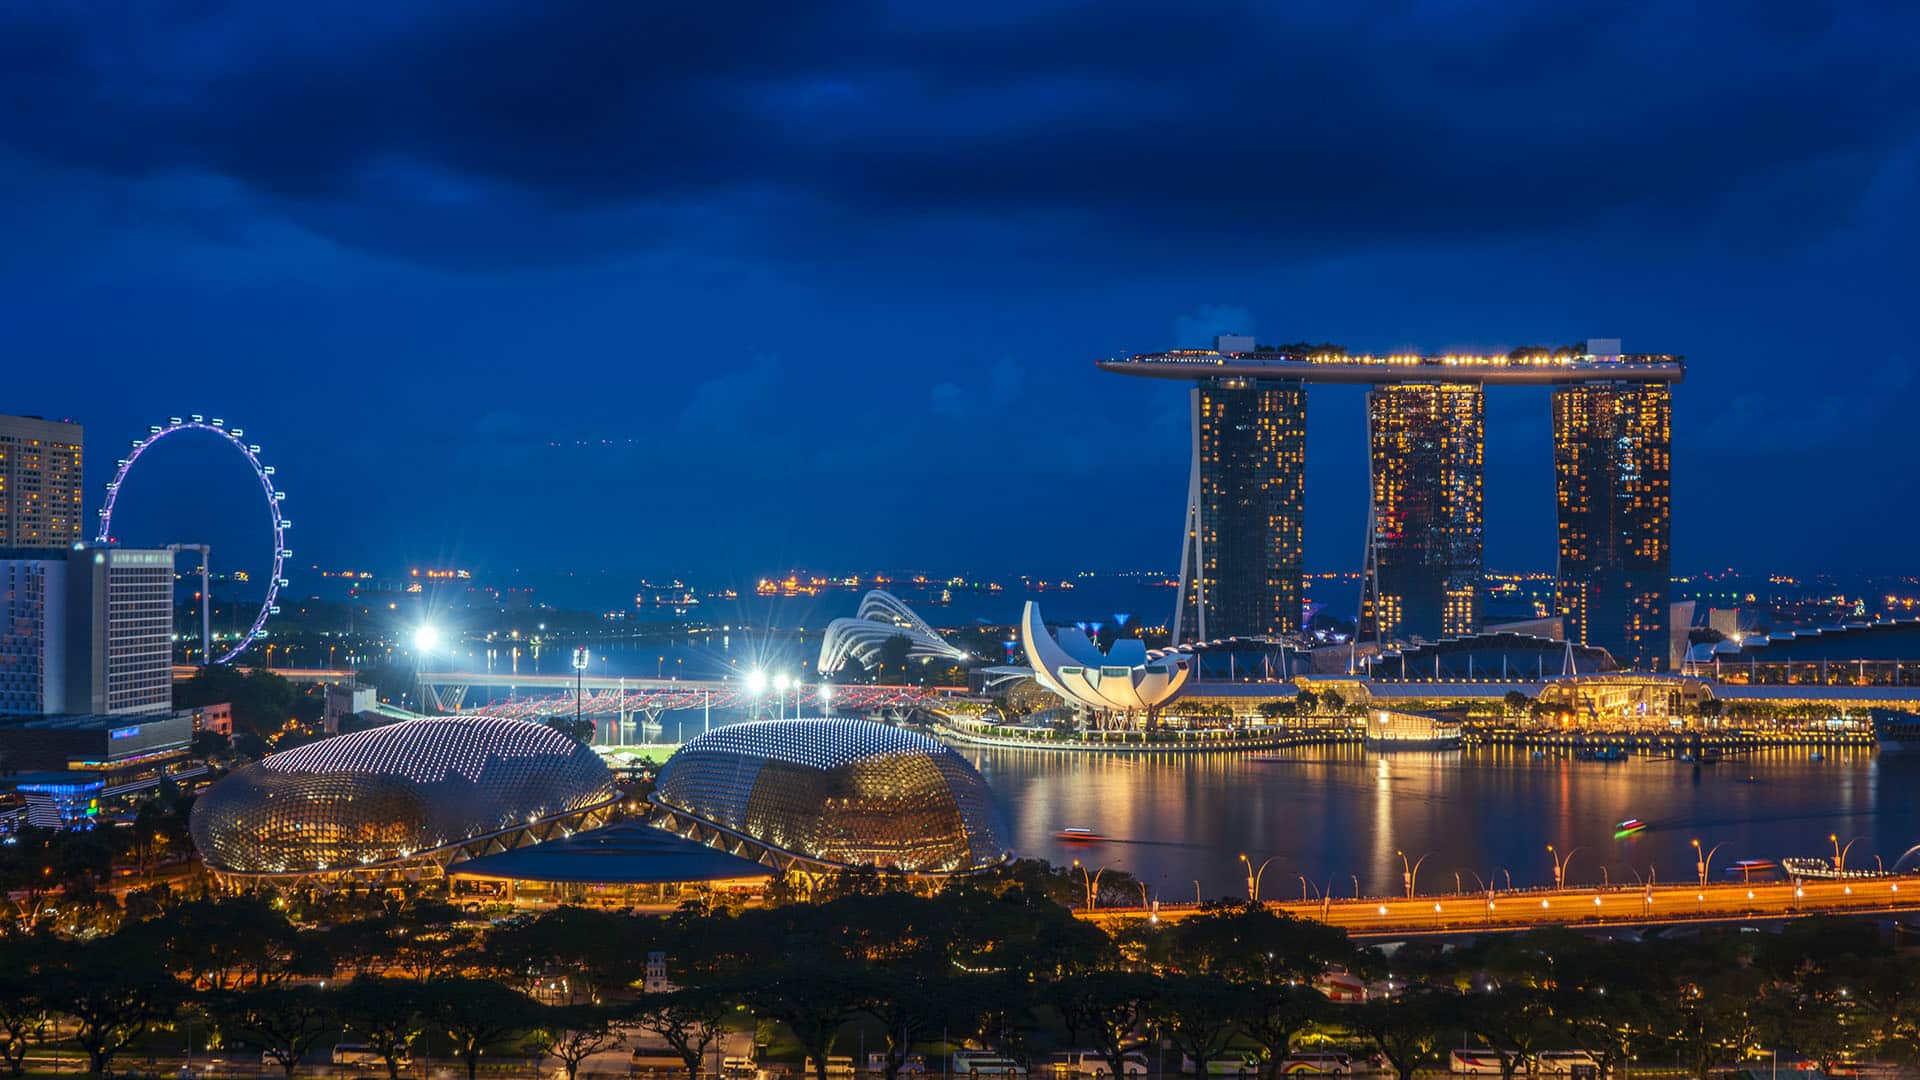 View of Singapore's skyline at night